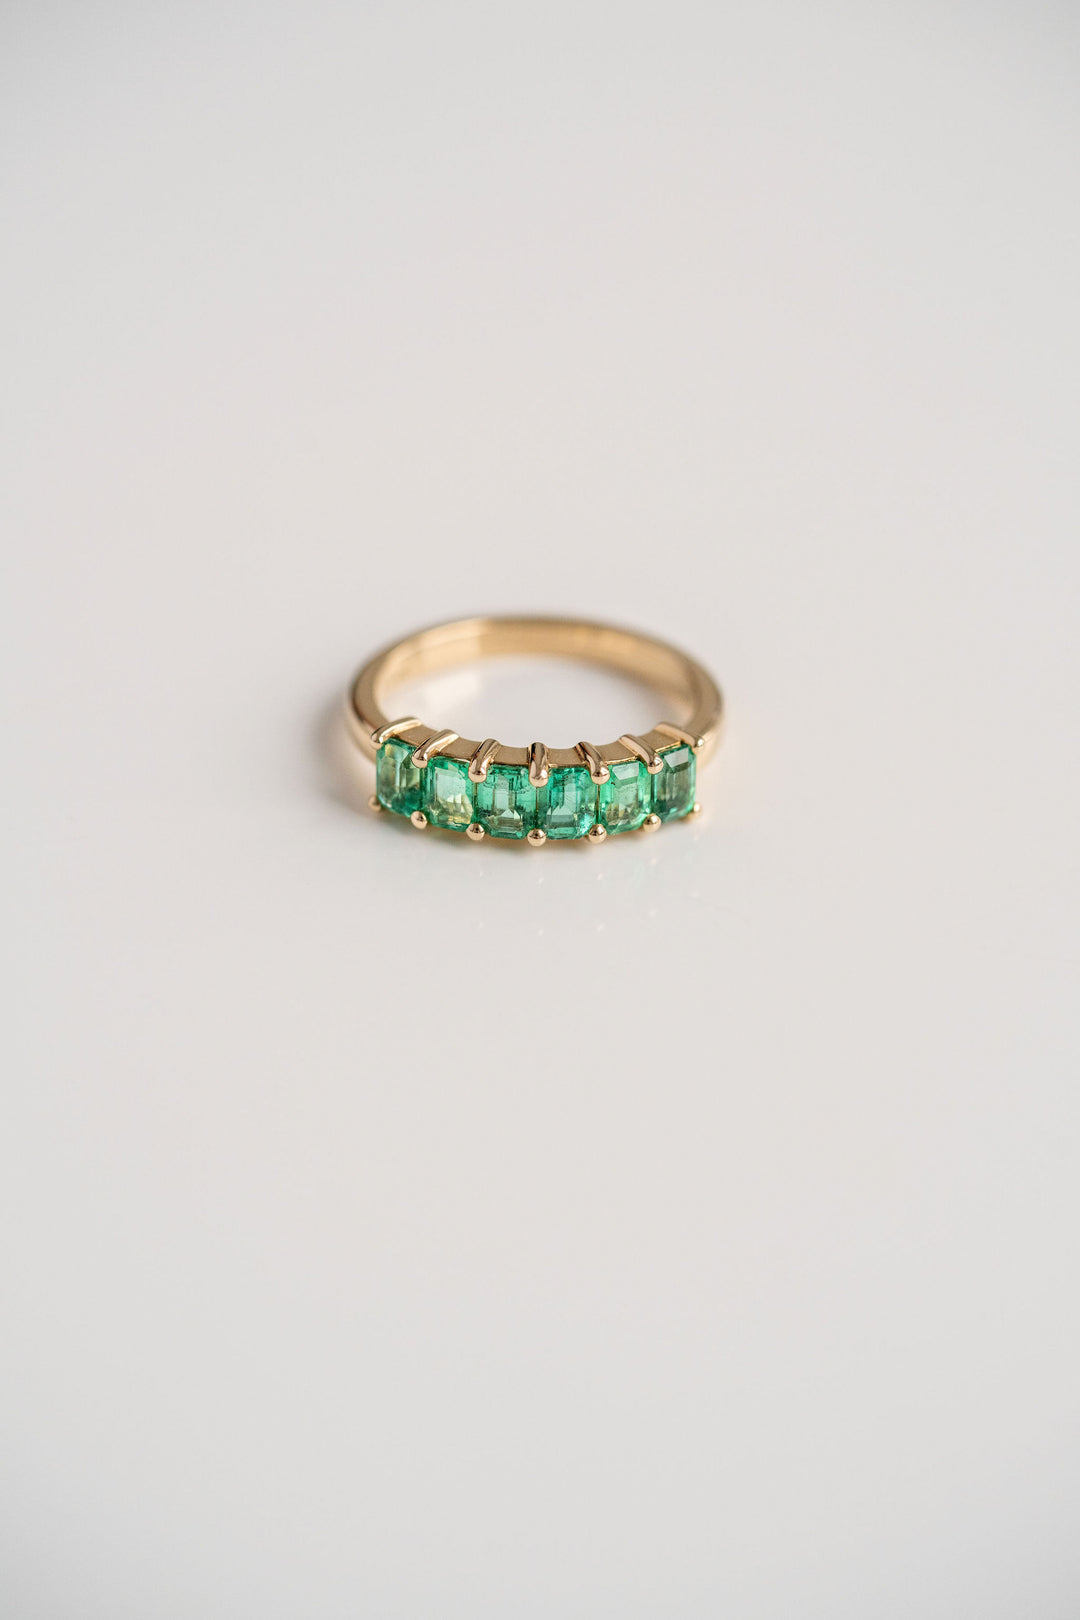 1.60ctw. Emerald Cut Colombian Emerald Gemstone Band, 14k Yellow Gold